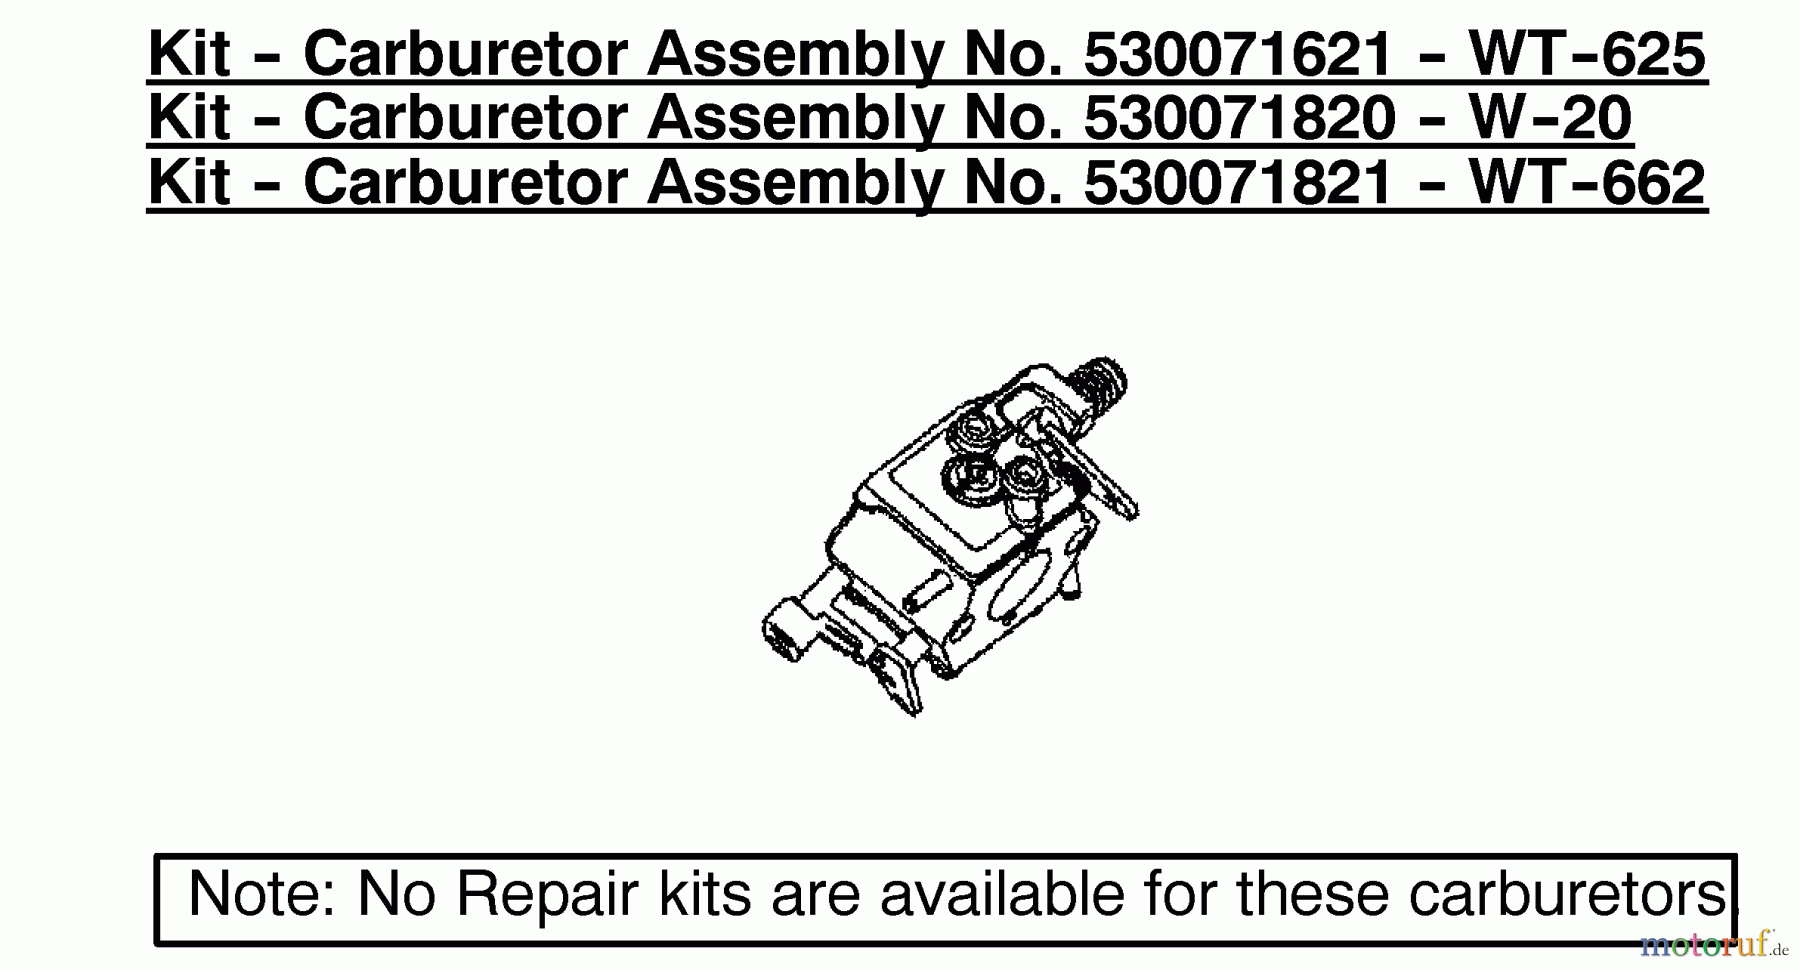  Poulan / Weed Eater Motorsägen 2550 (Type 2) - Poulan Woodmaster Chainsaw Kit - Carburetor Assembly 530071621/530071820/530071821